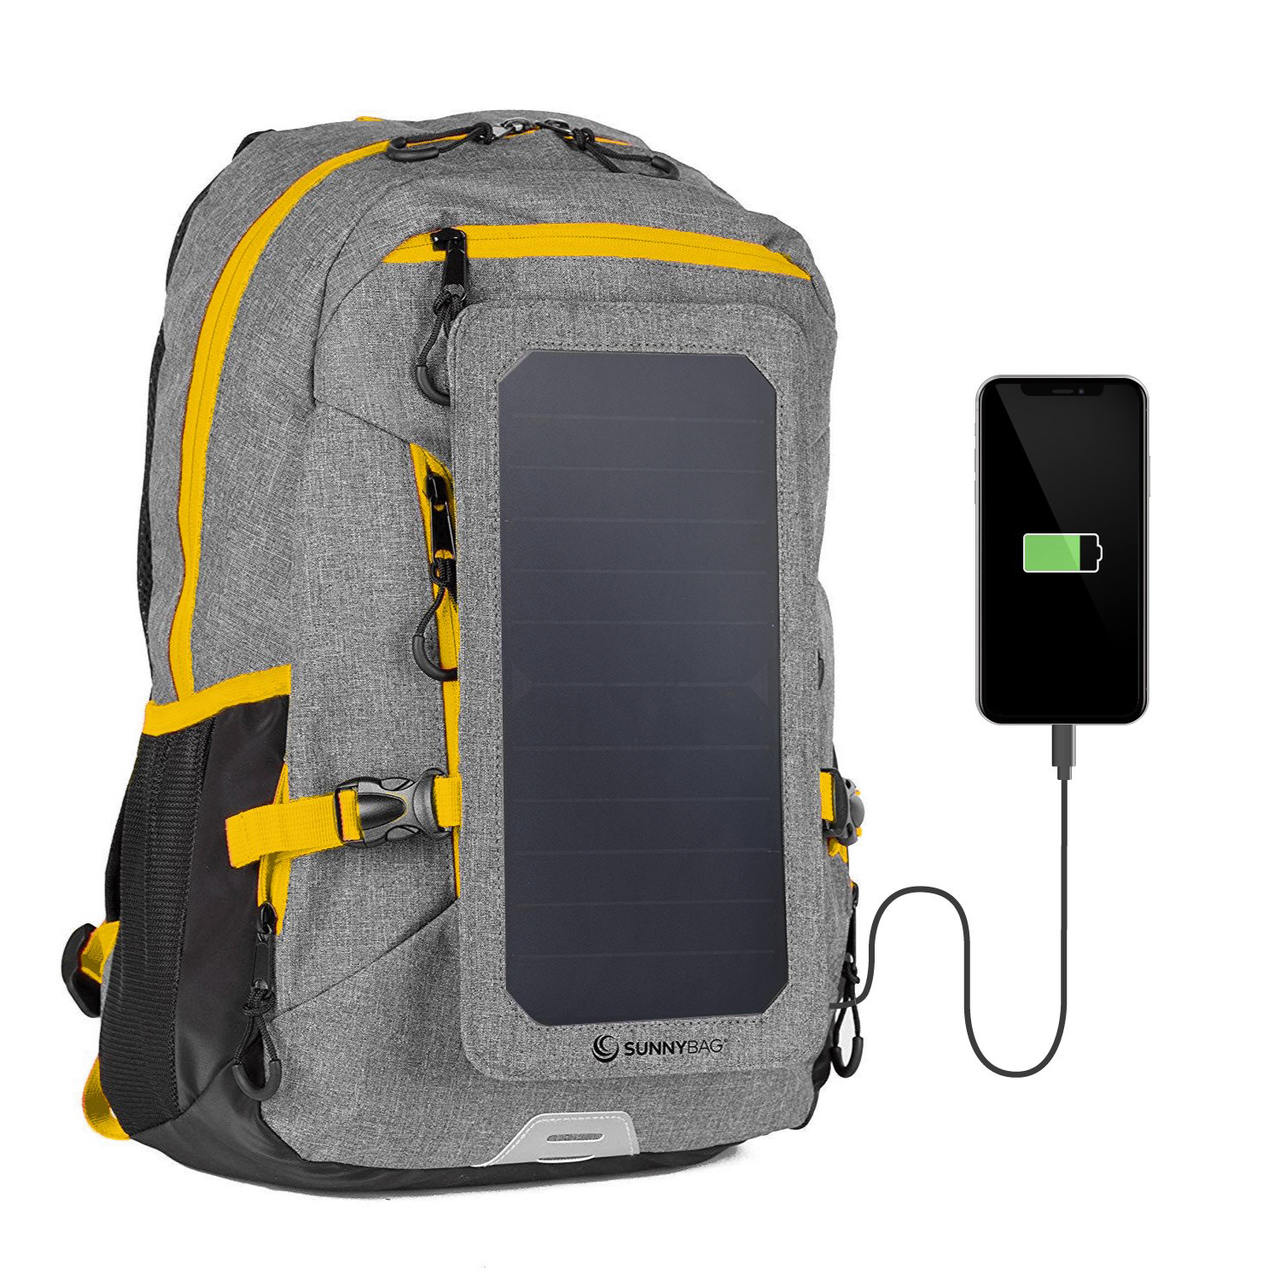 Sunnybag POWERPACK 10.000 Autostart Wireless Charging